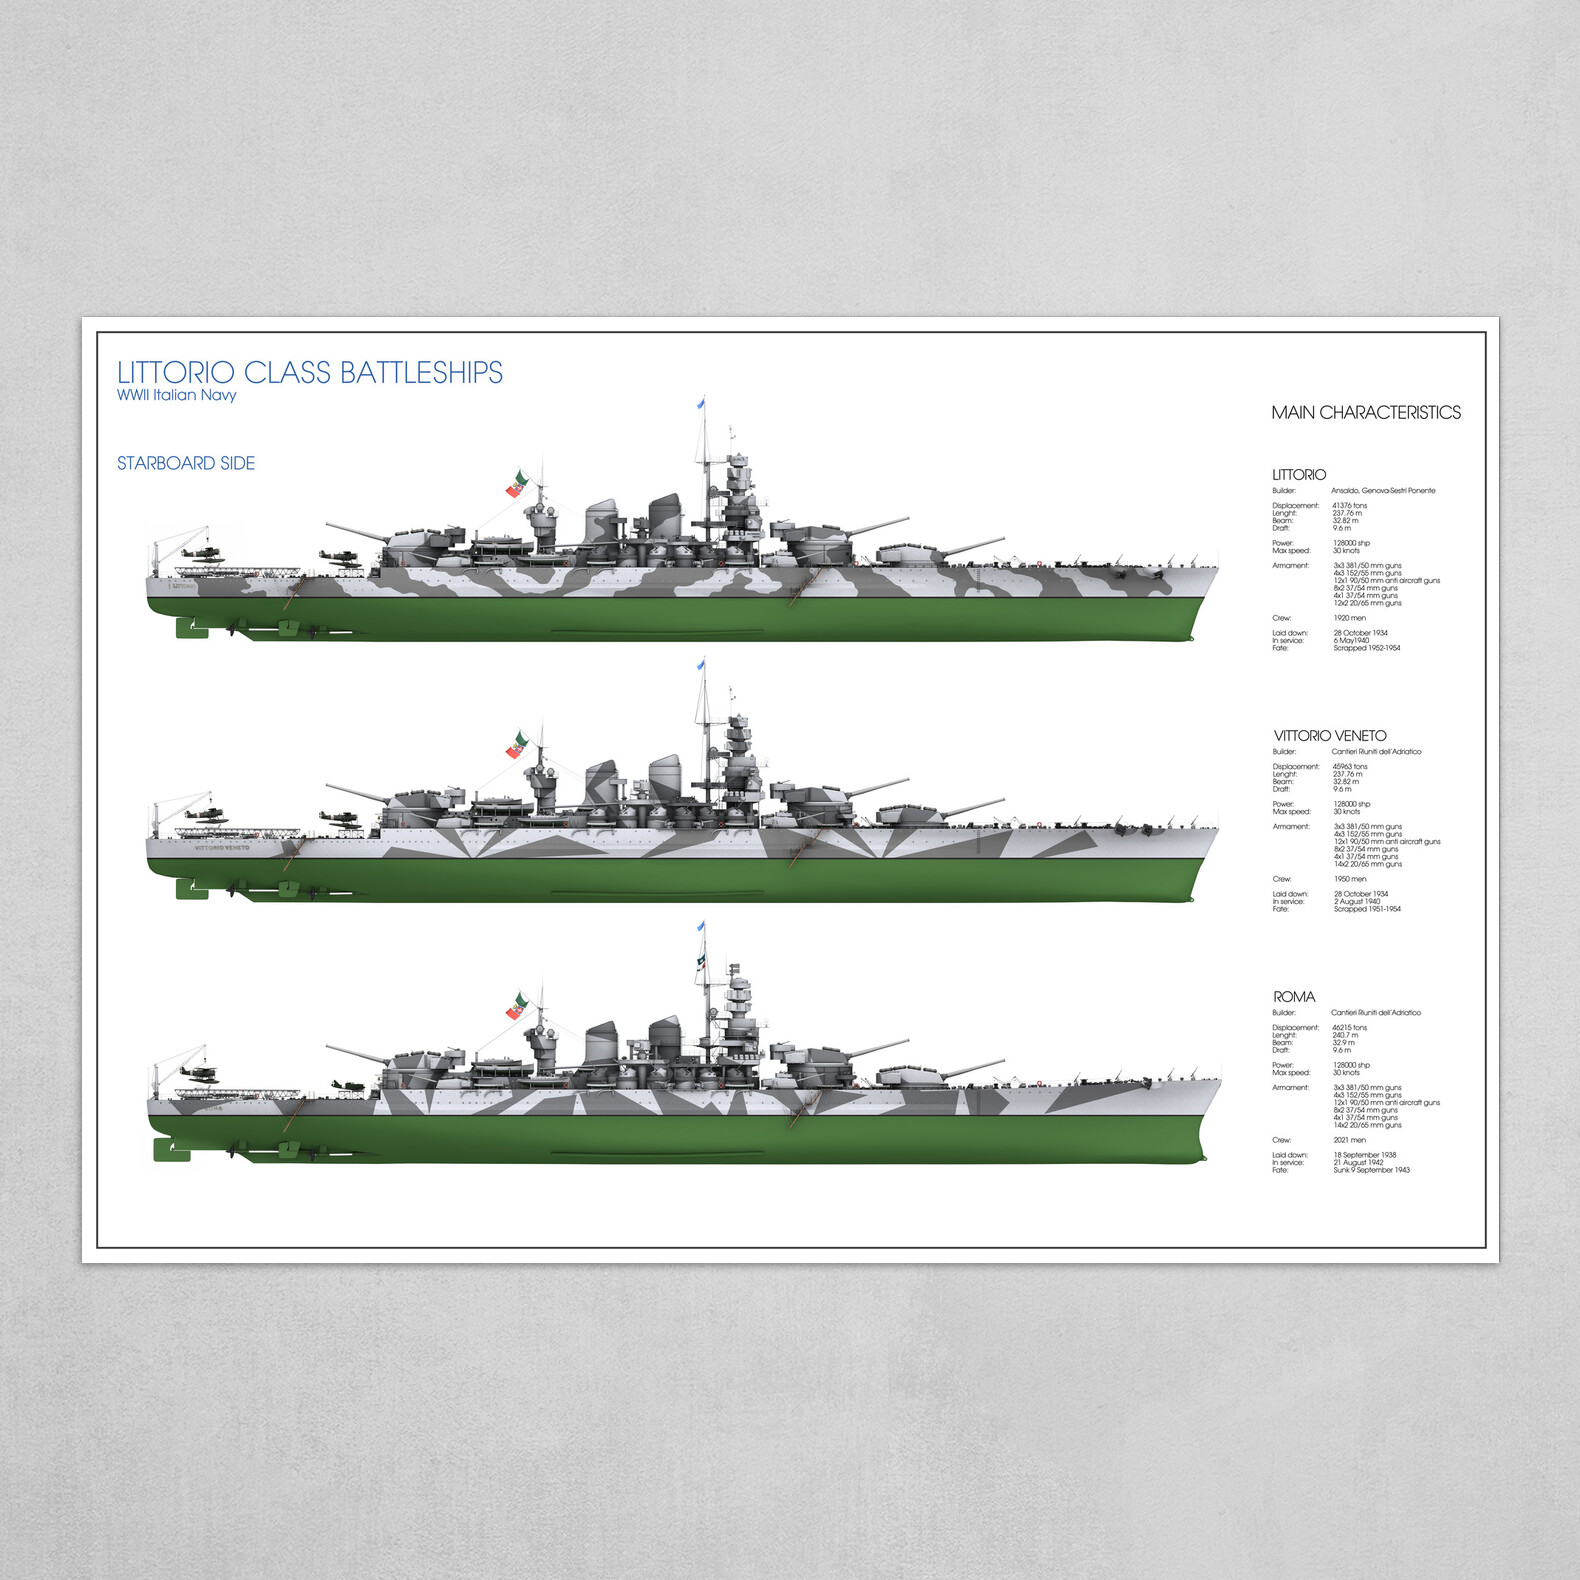 Littorio Class Battleships - starboard side view